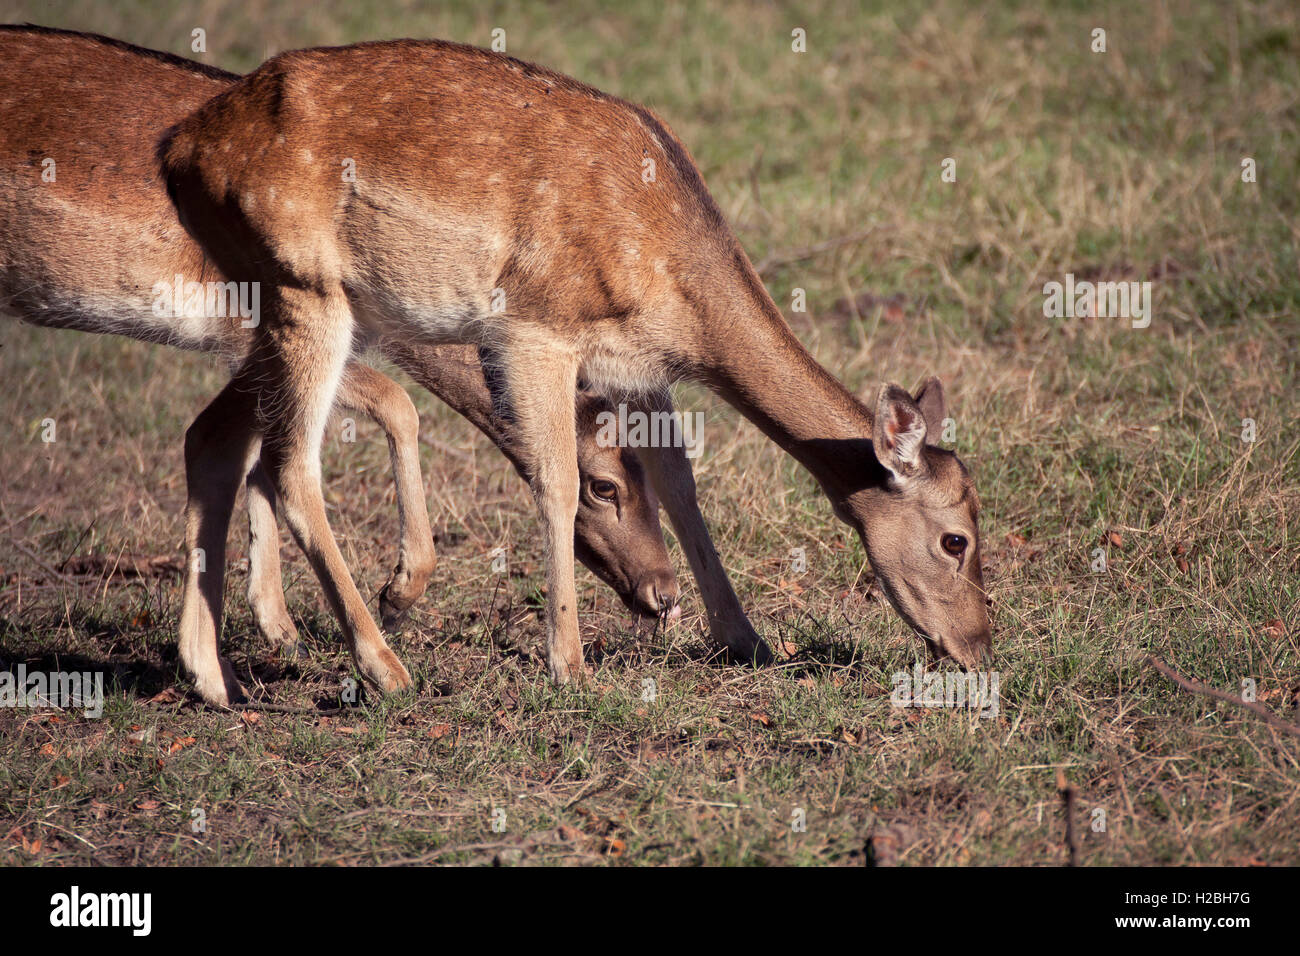 Nature wildlife portrait, fawns grazing weeds, blurred background Stock Photo